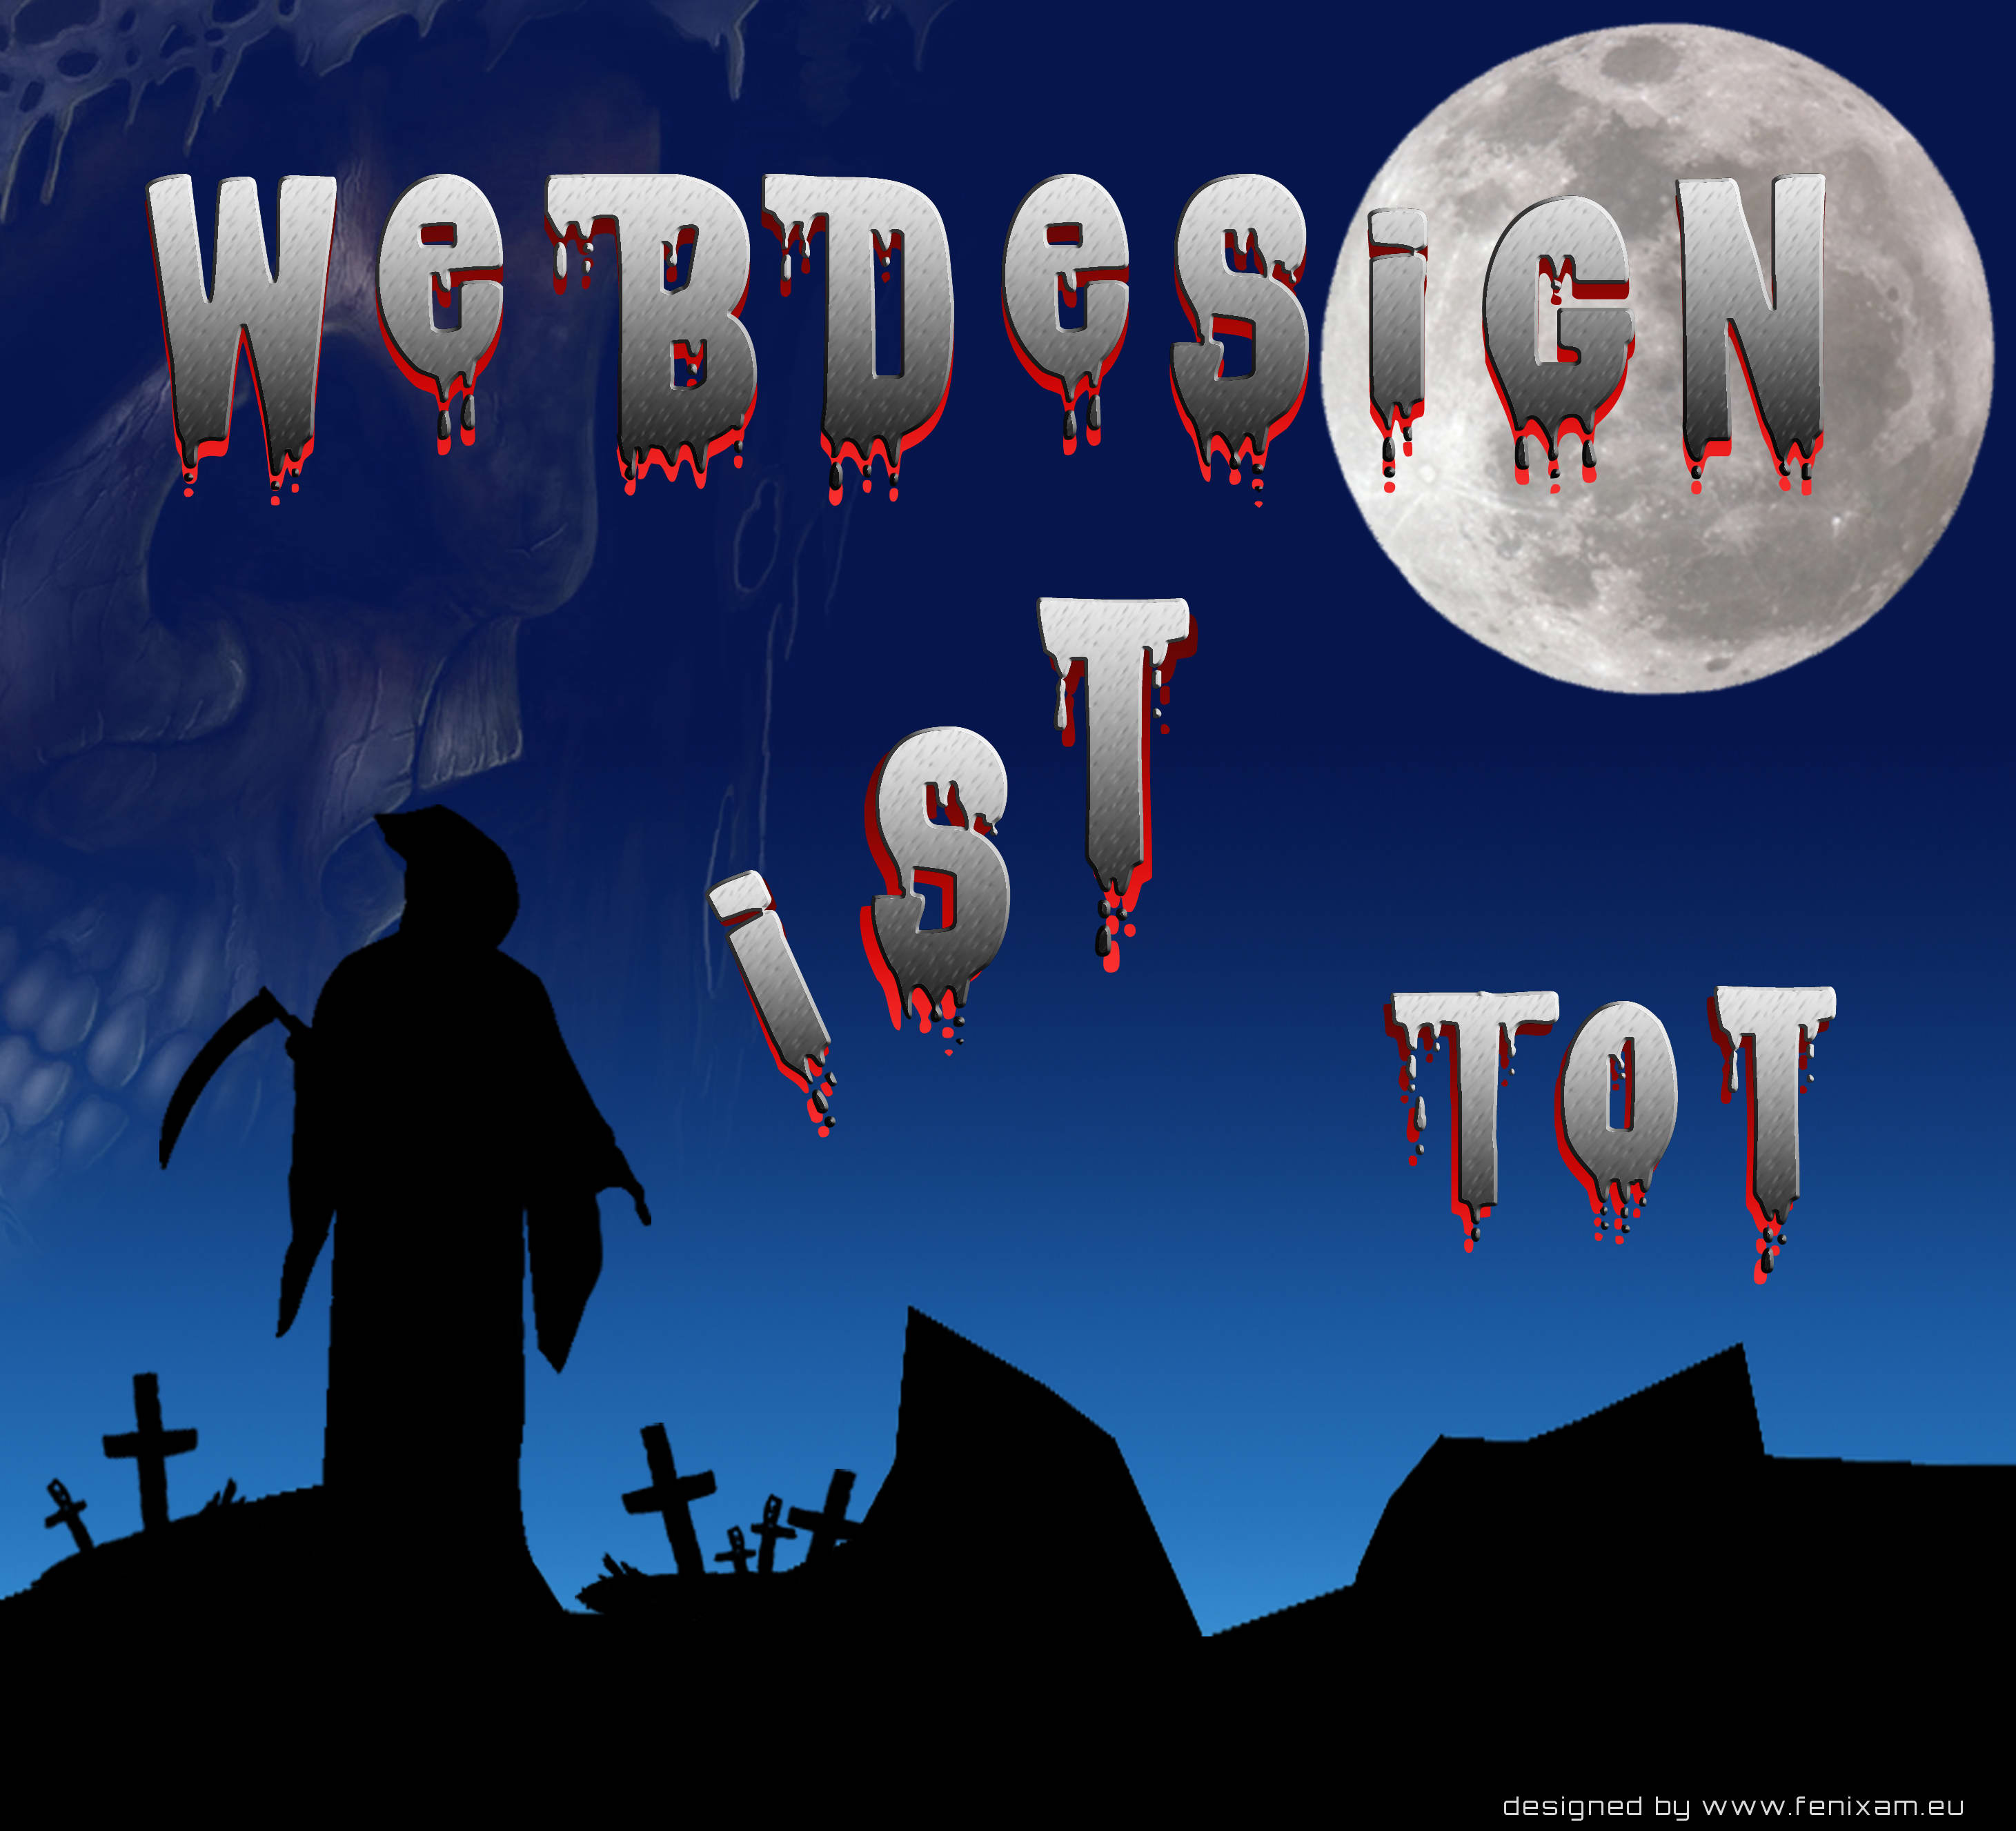 Webdesign ist tot